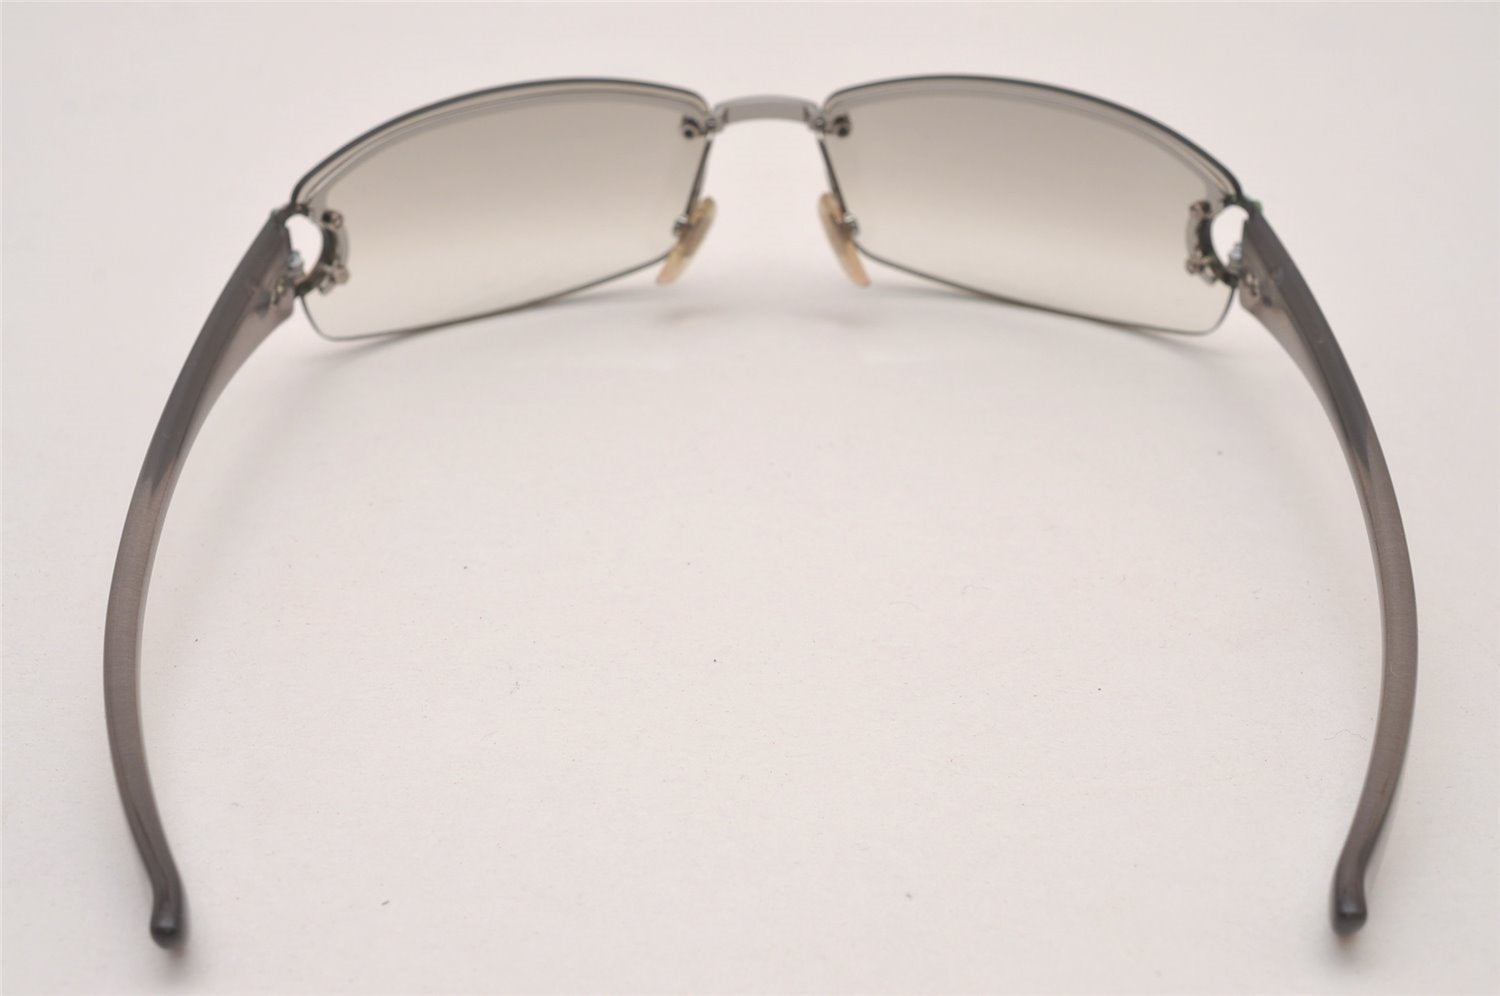 Authentic GUCCI Vintage Horsebit Sunglasses 2743/F/S Plastic Silver 6330I